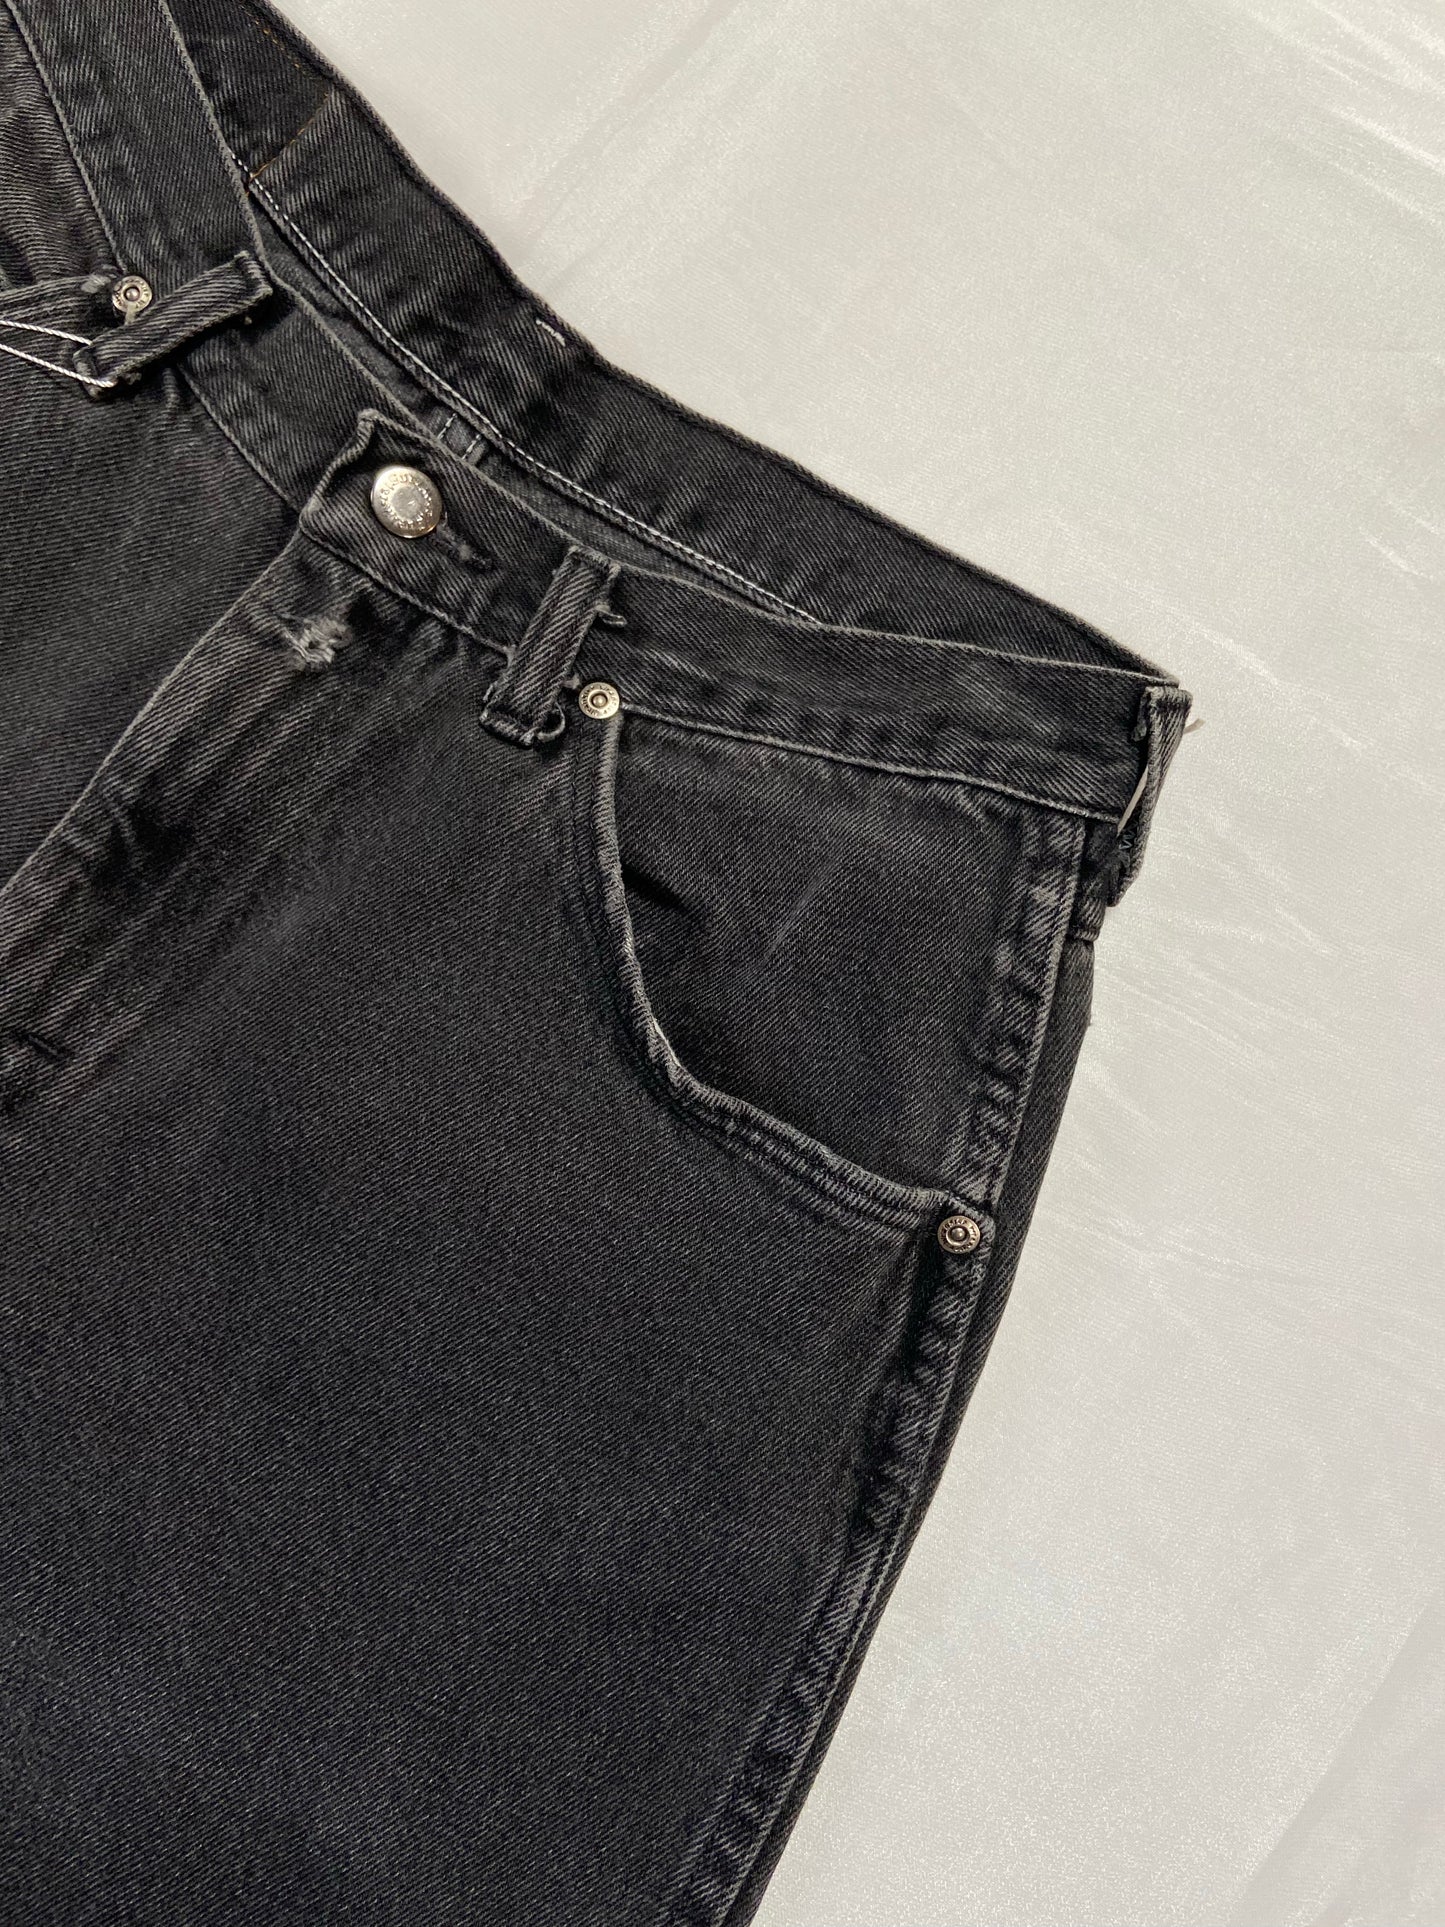 Black Wrangler Jeans - 28”